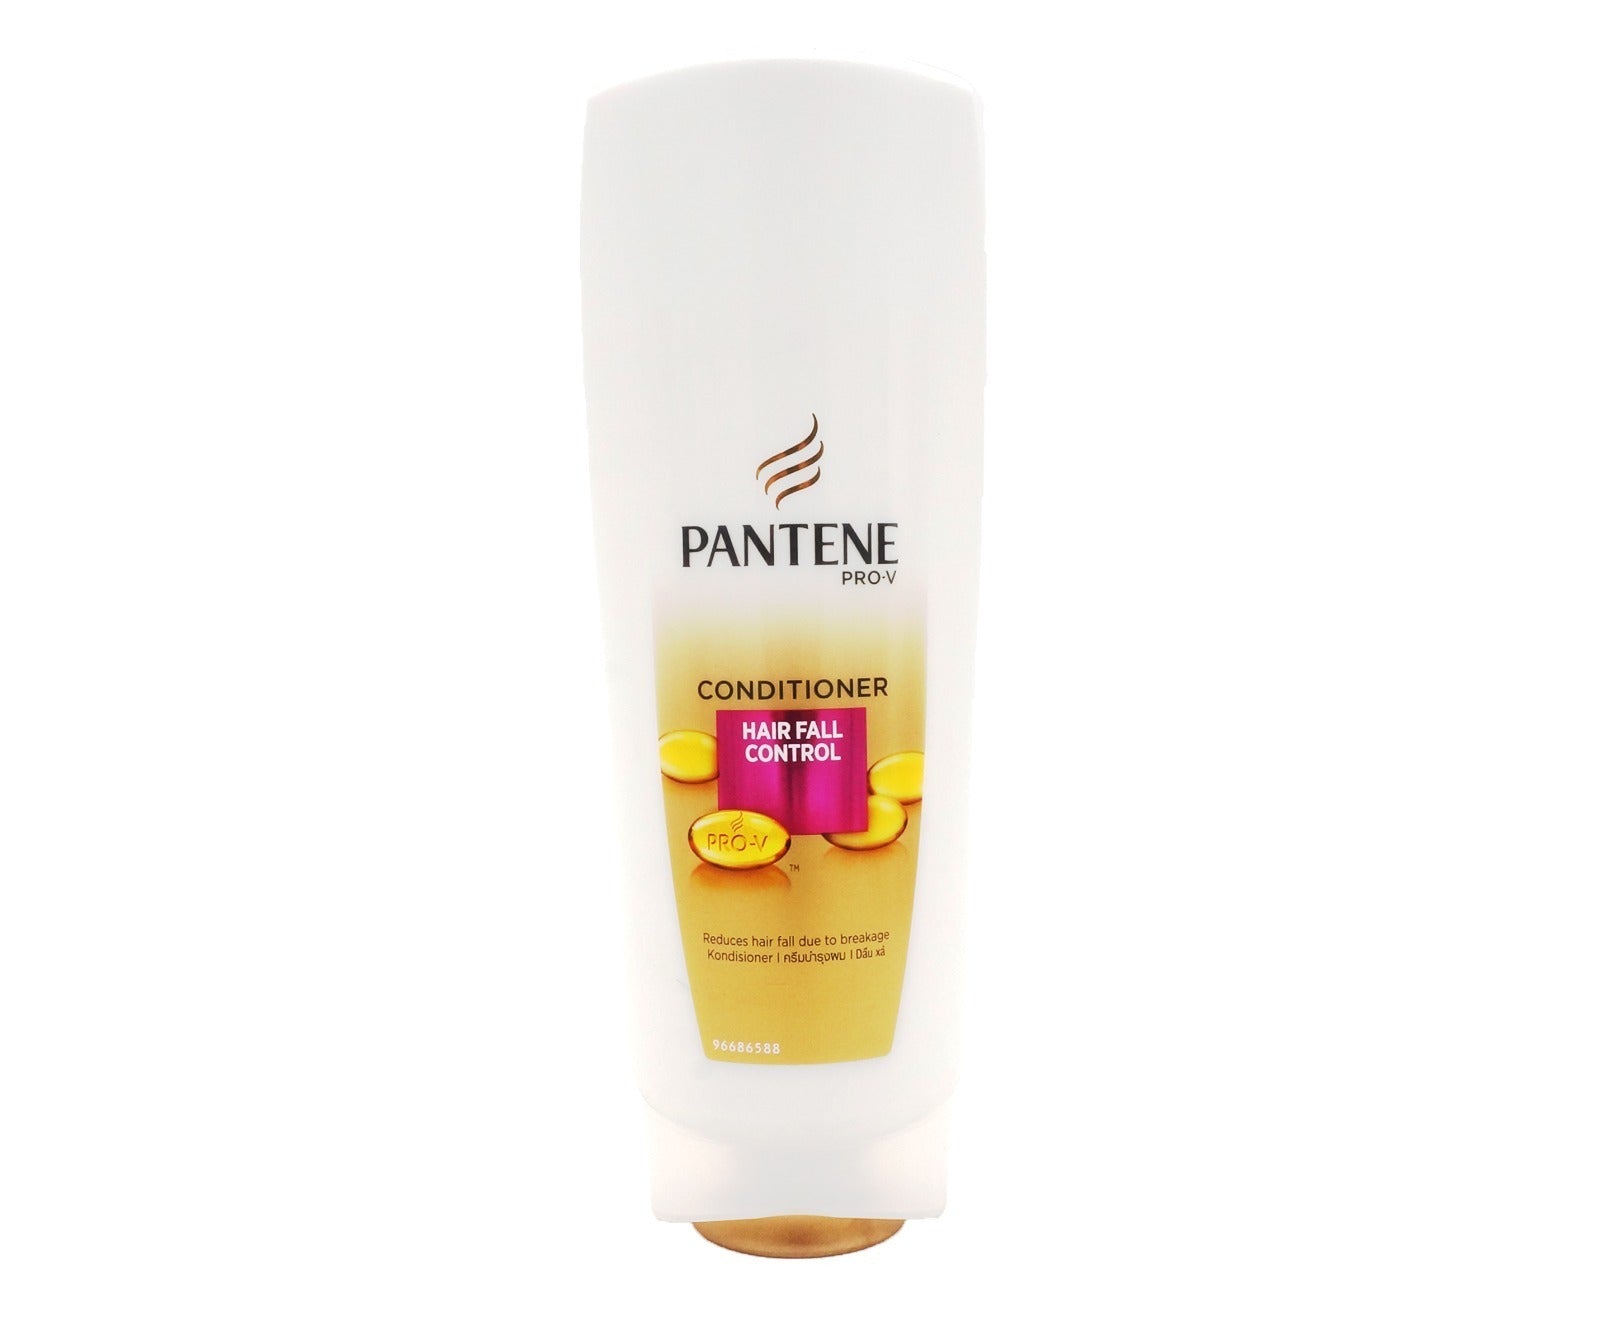 Pantene Conditioner - Hair Fall Control (450ml – Piece)